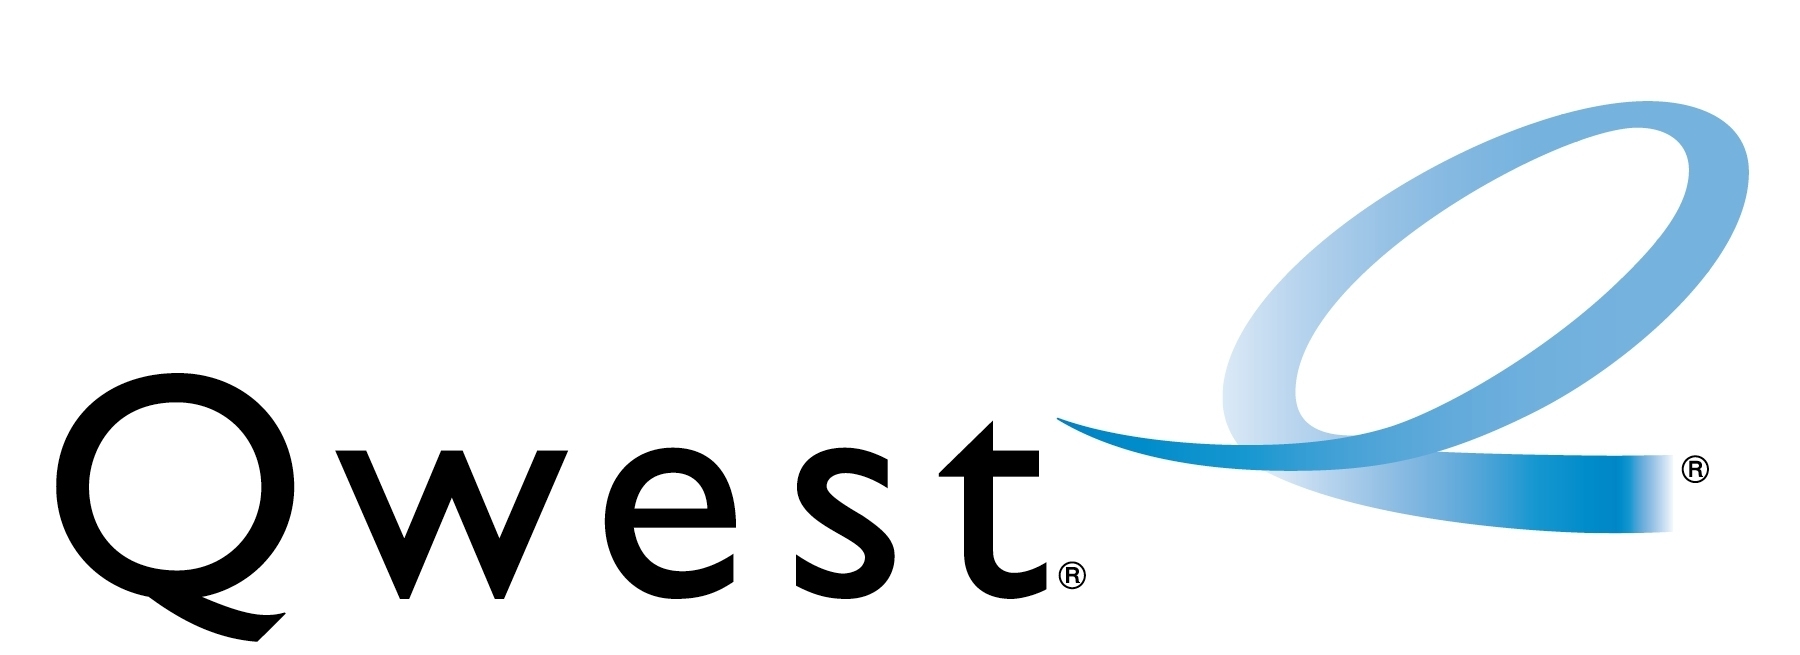 Qwest Logo photo - 1